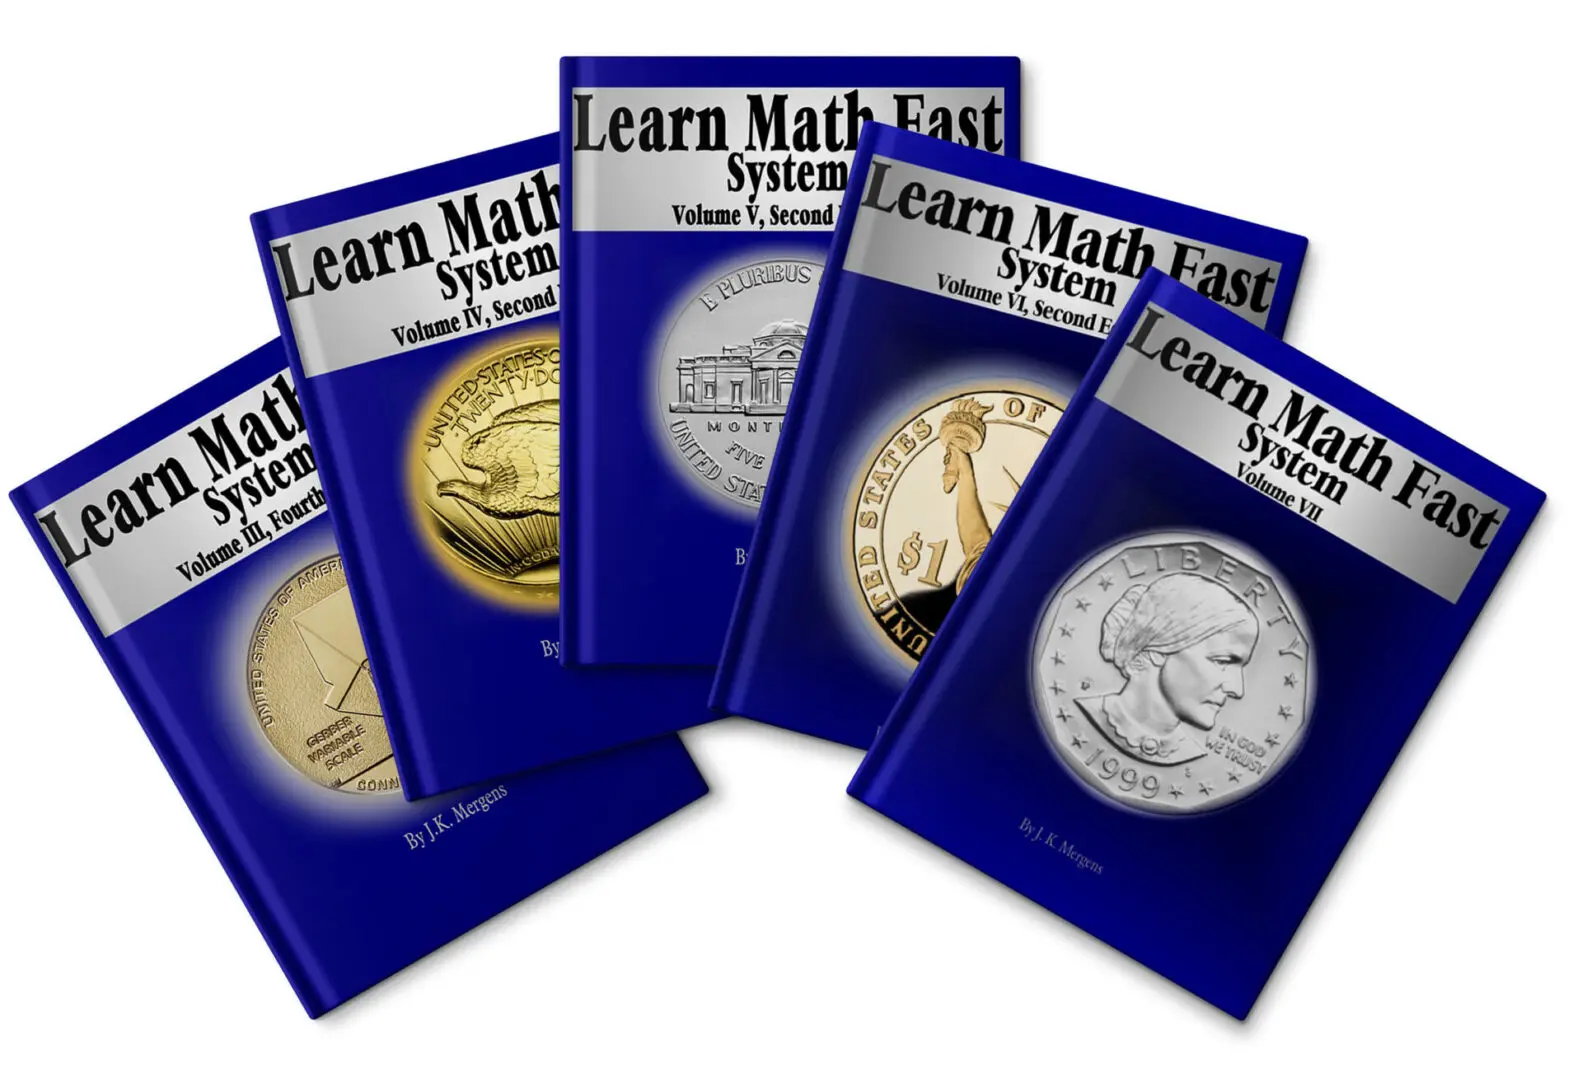 A set of five books about math.